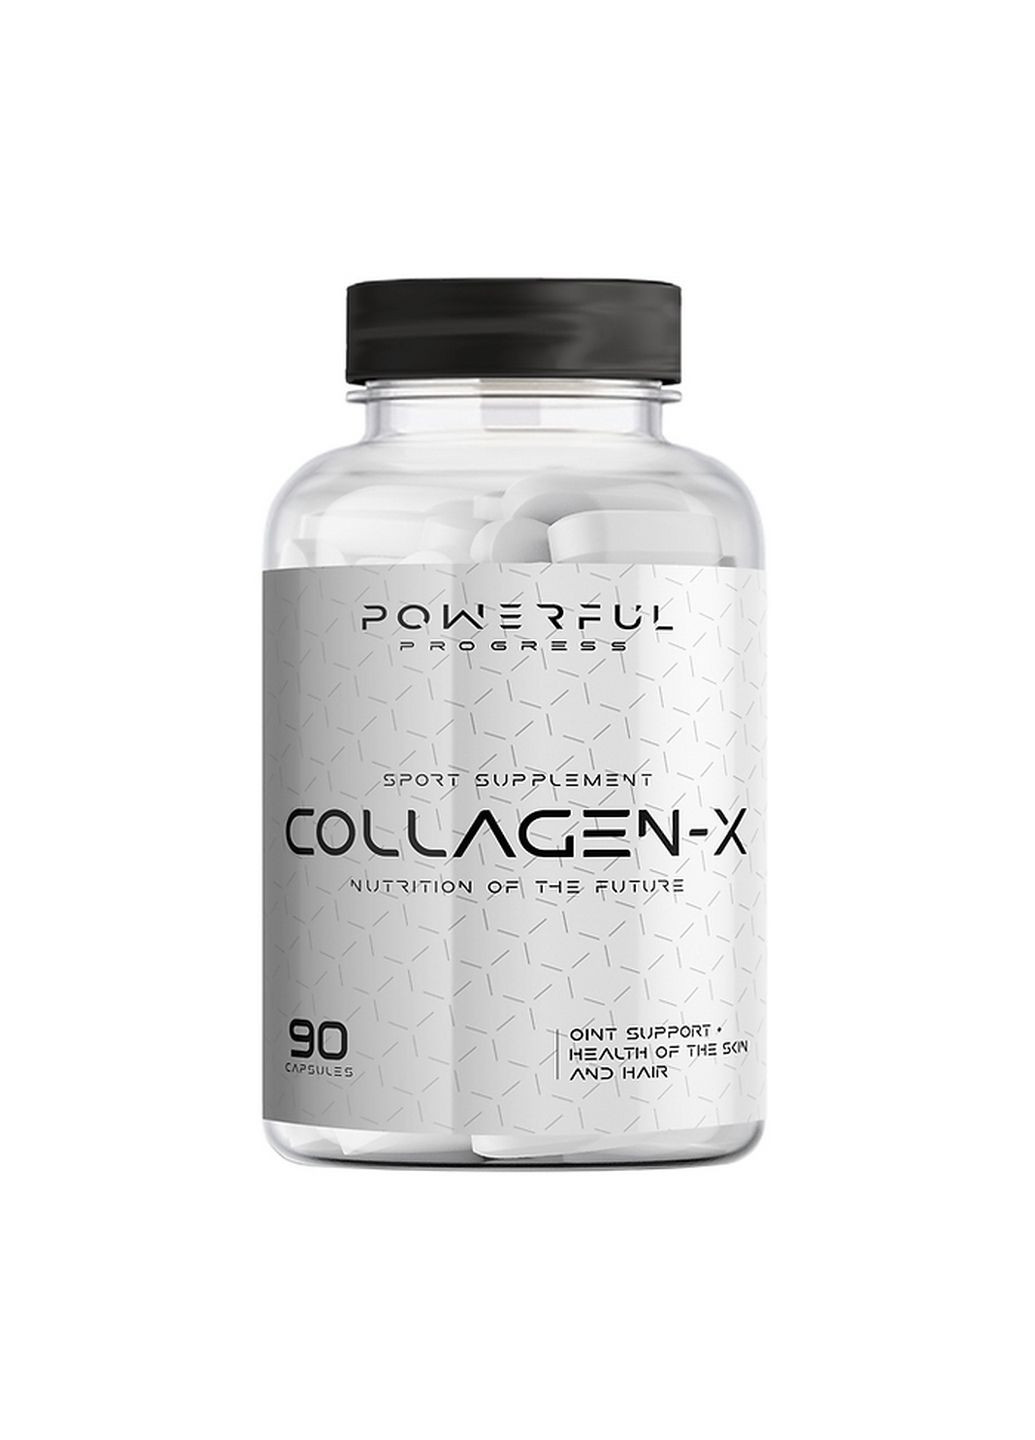 Препарат для суставов и связок Collagen-X, 90 капсул Powerful Progress (293337862)